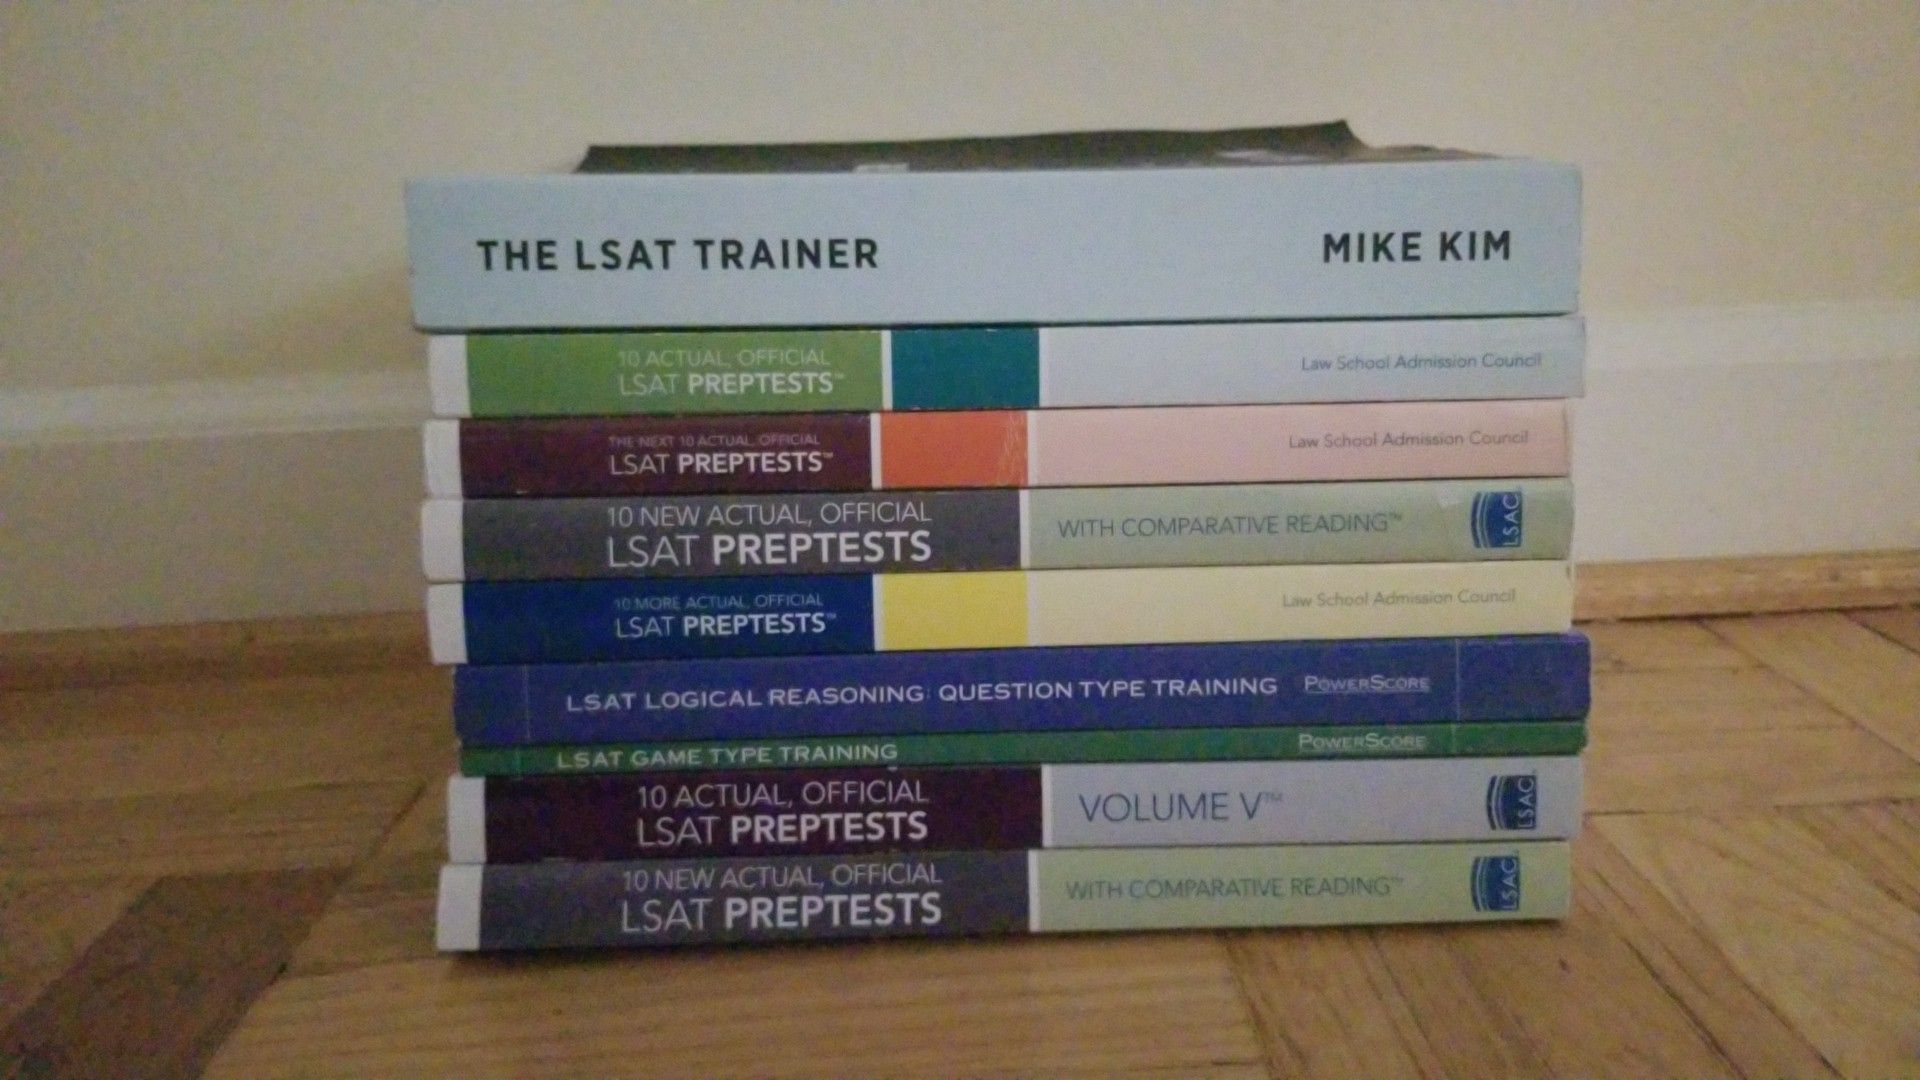 LSAT training books